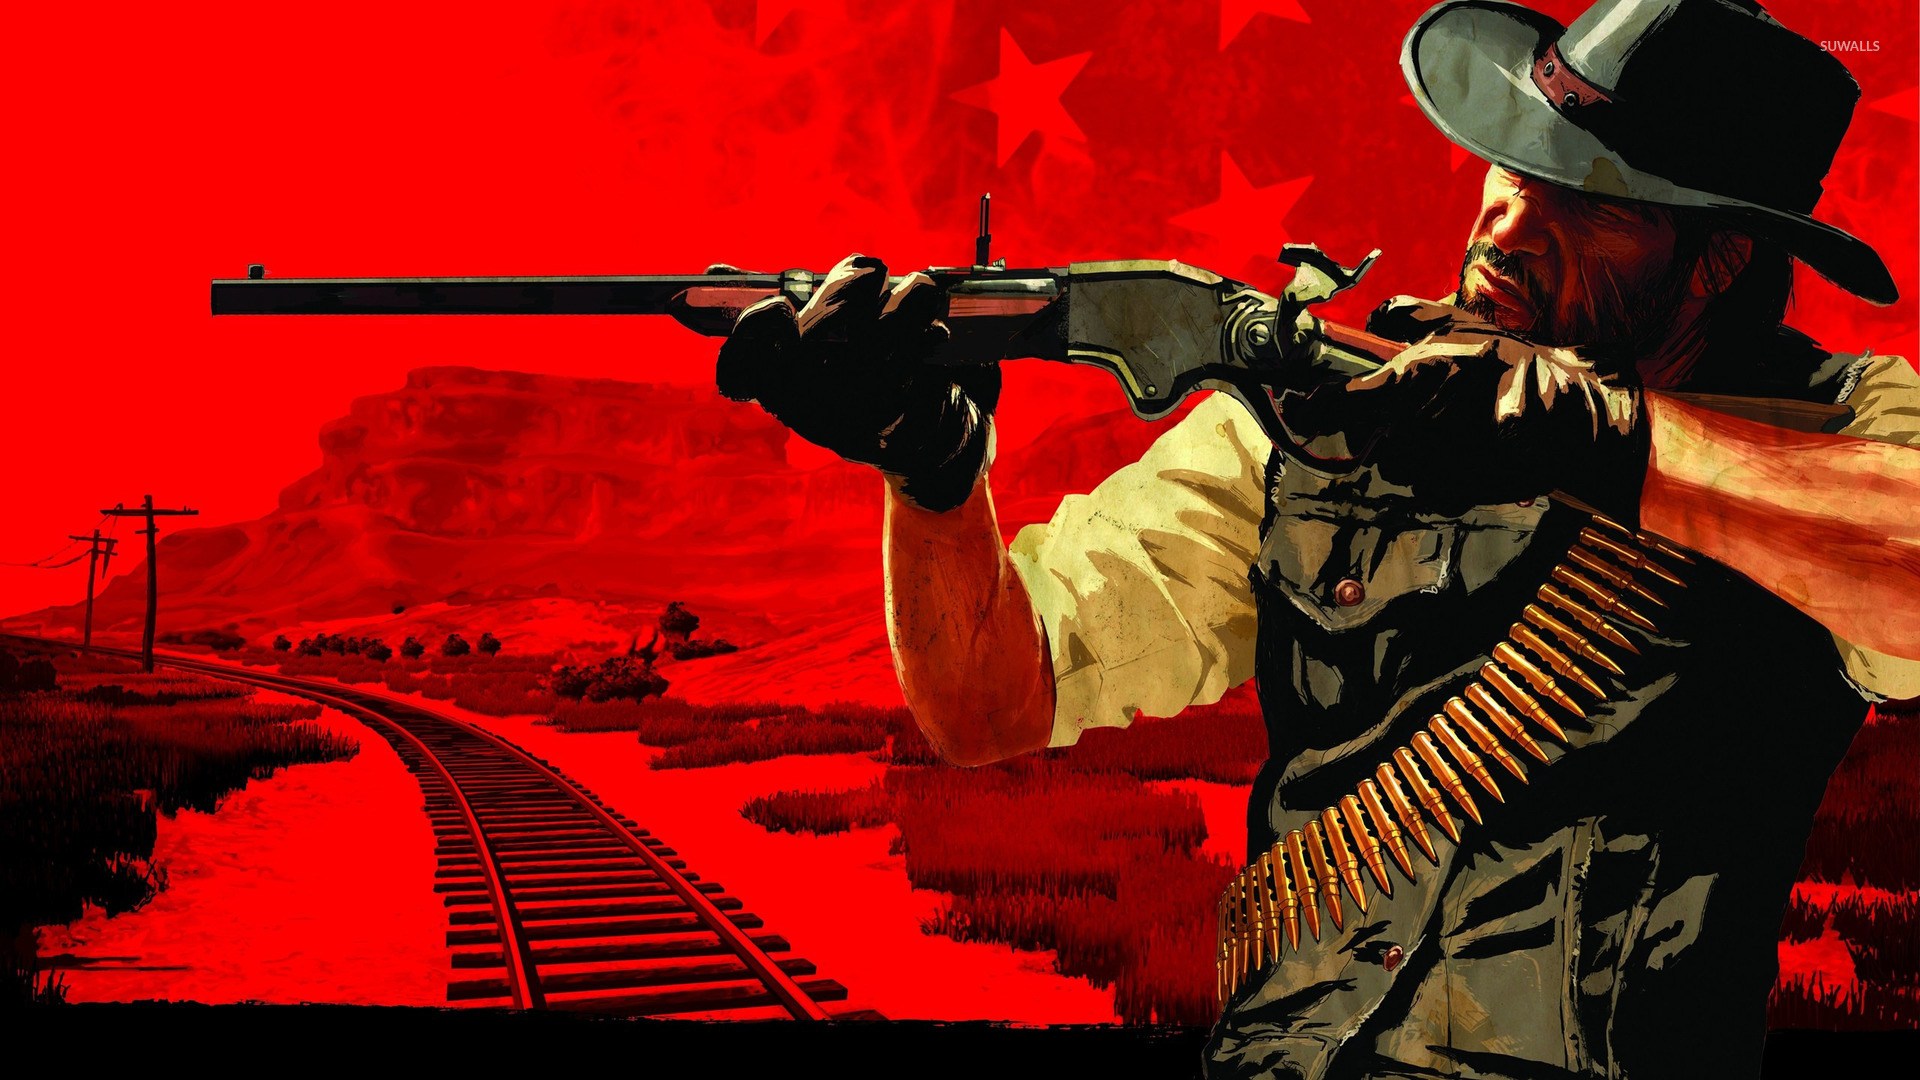 Digital Art Video Game Art Video Games Red Dead Redemption Red Dead Redemption 2 Red Weapon Gun Hat  1920x1080